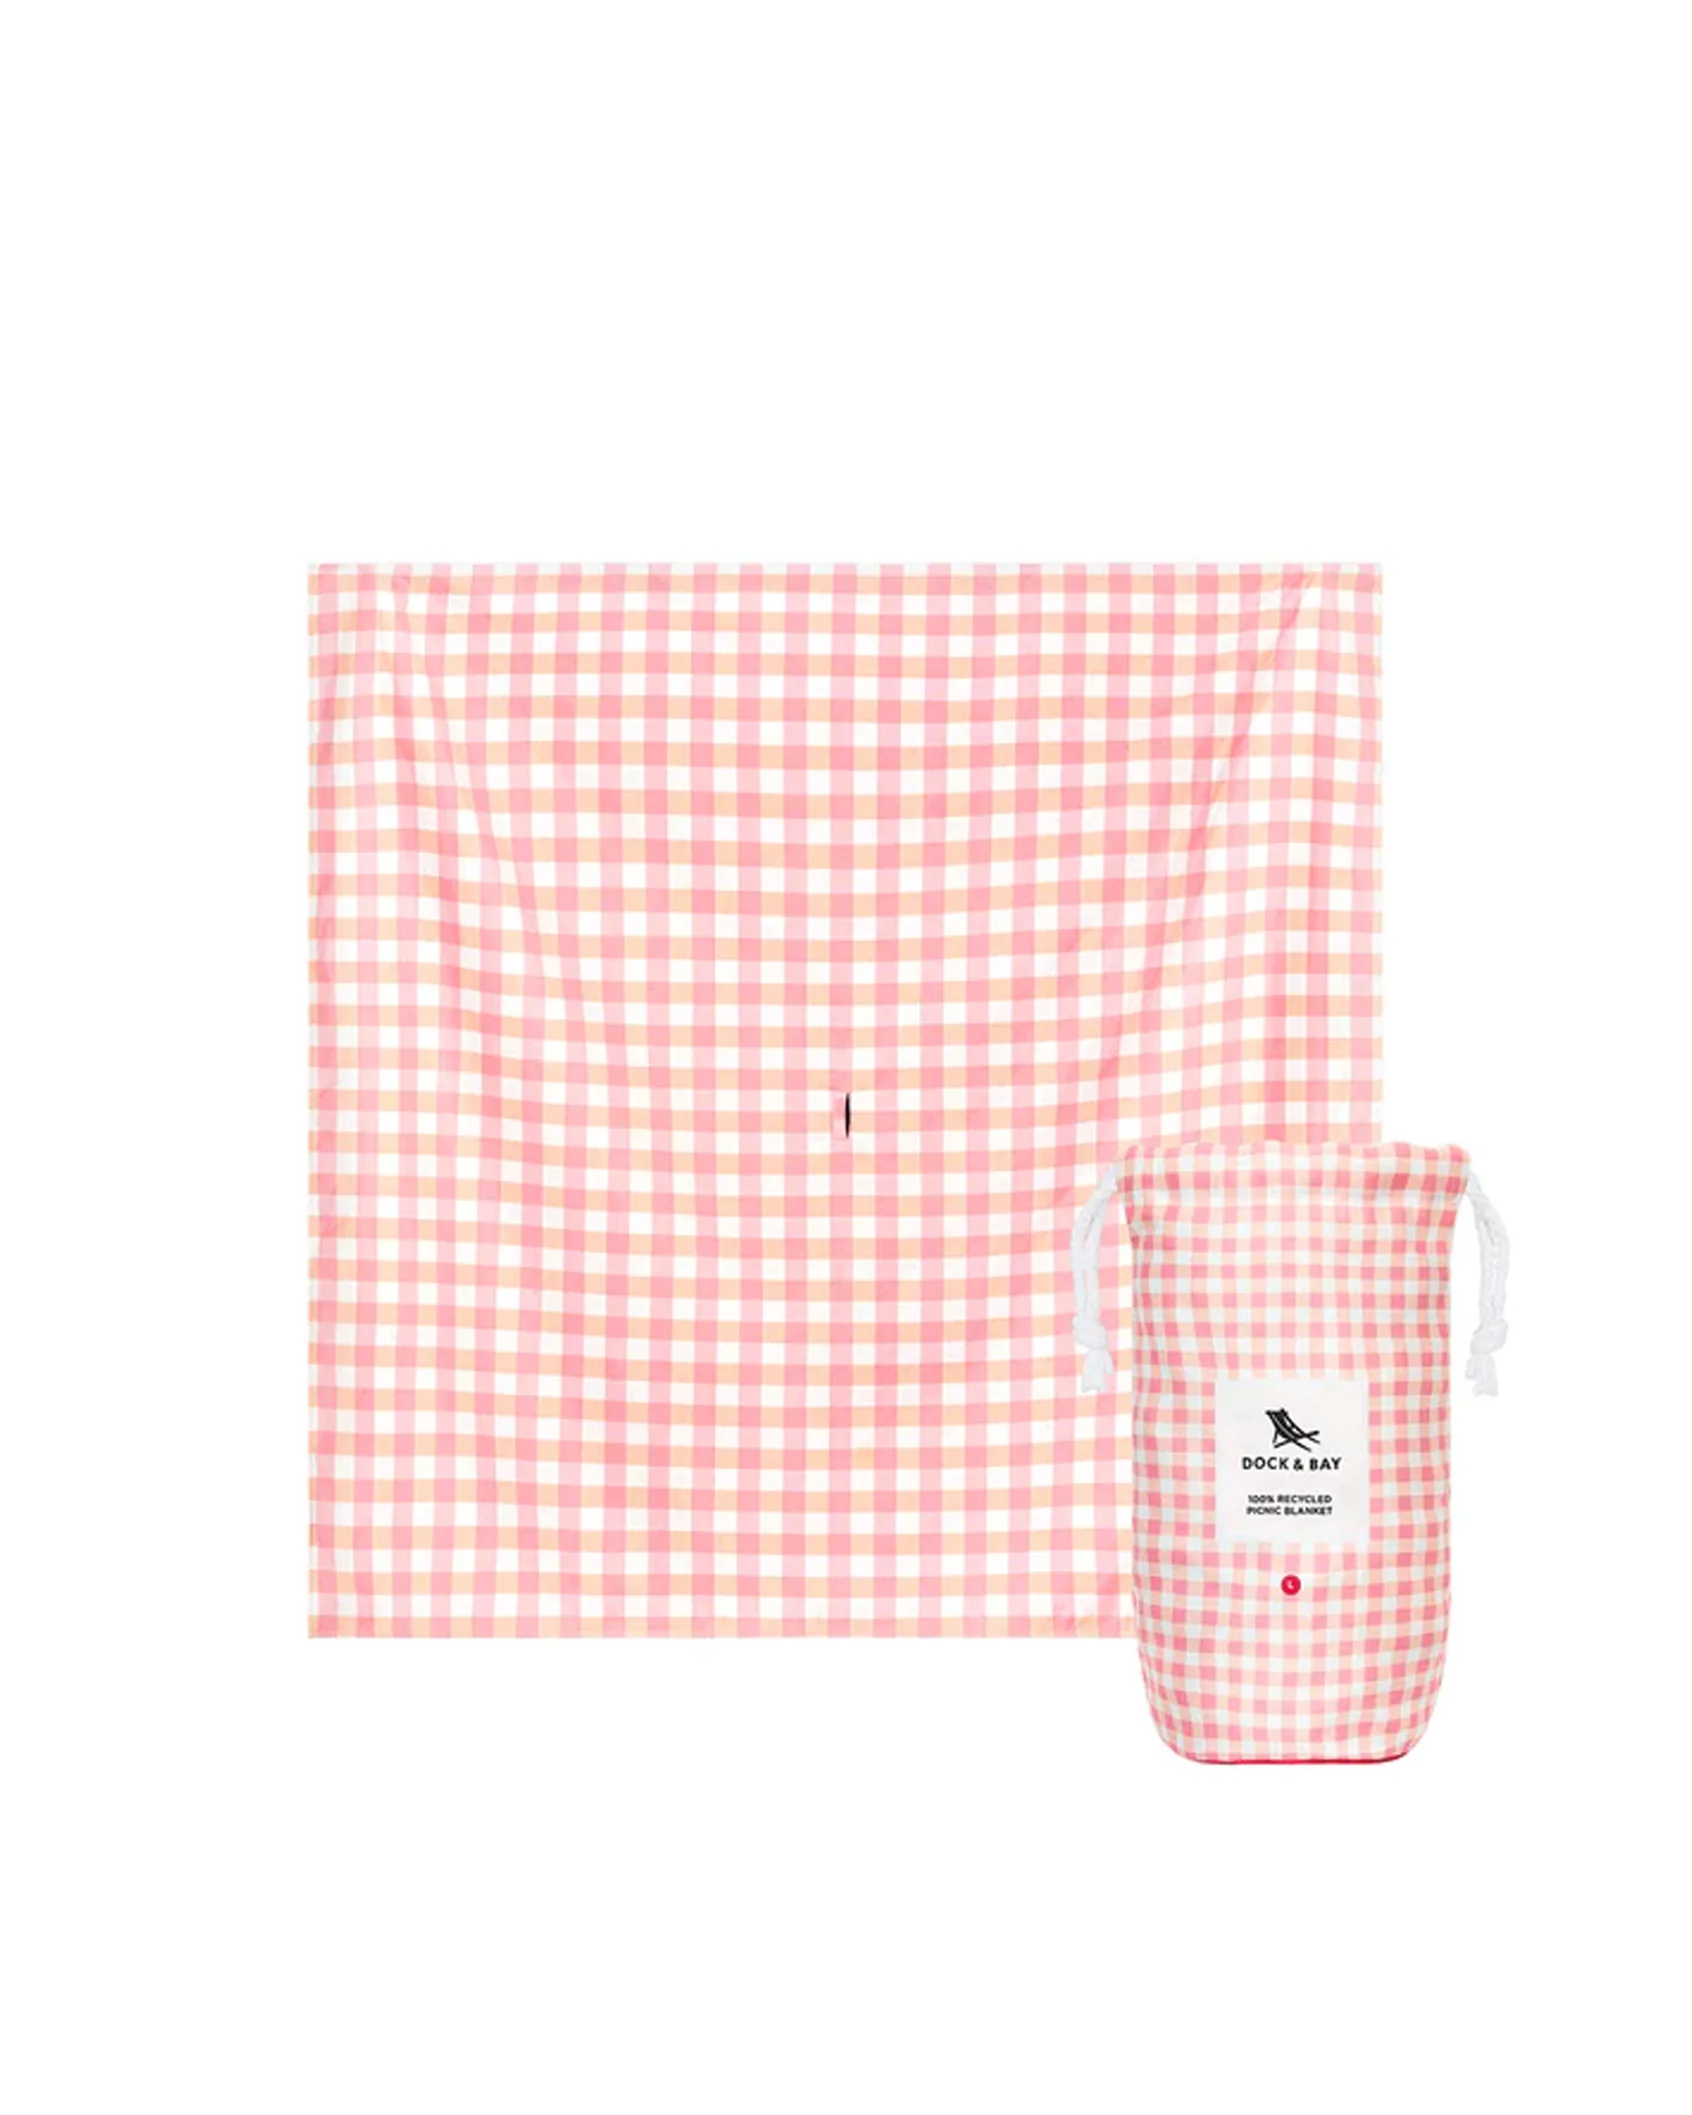 Dock & Bay Picnic Blanket Strawberries and Cream / XL